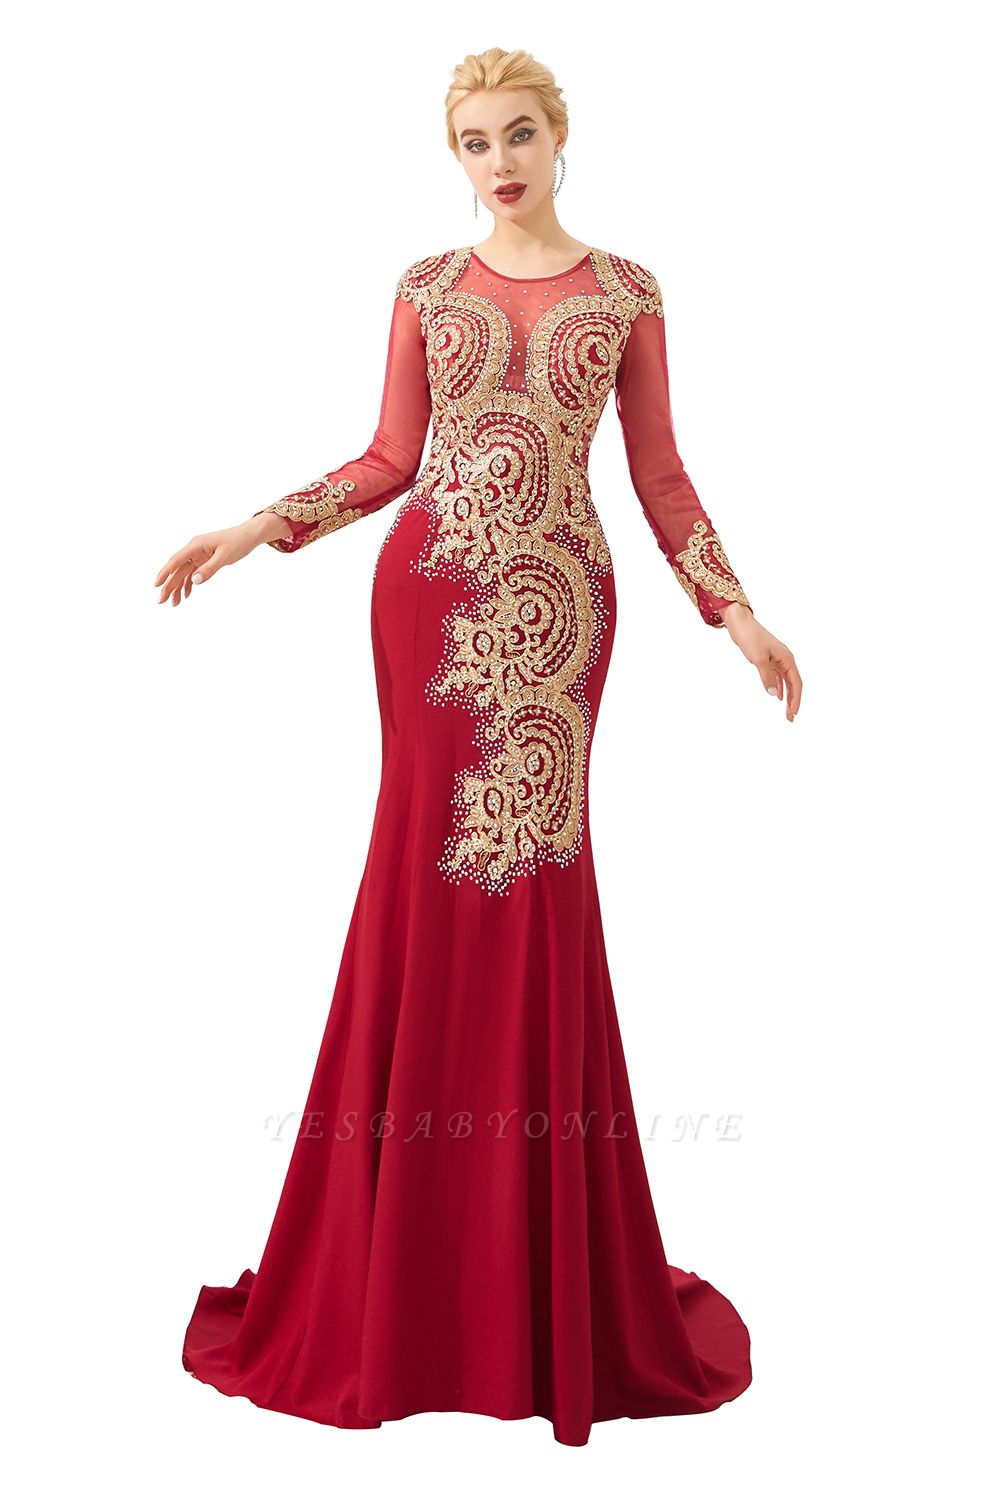 Gorgeous Form-fitting Long Sleeves Floor Length Prom Dresses | Long Beaded Evening Dresses